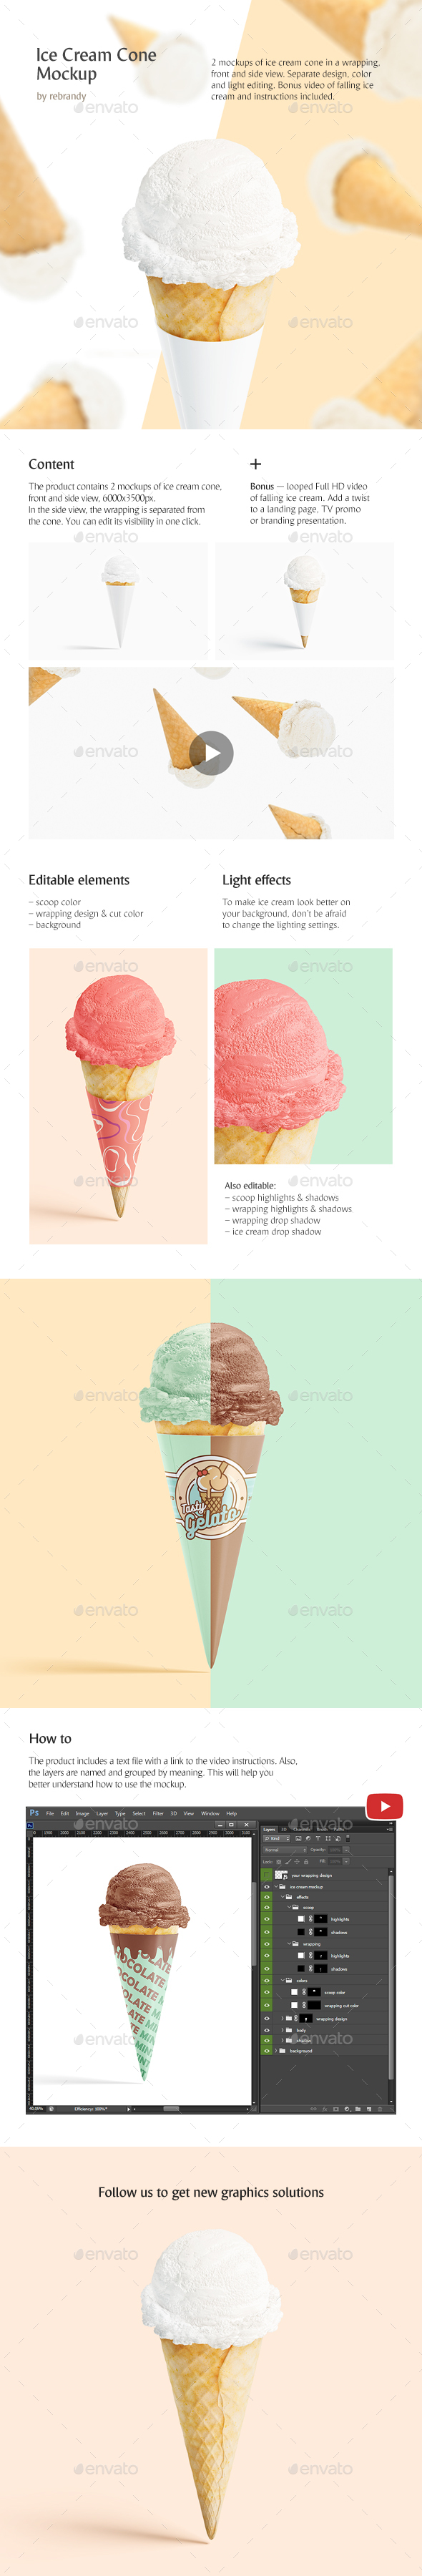 Download Ice Cream Cone Mockup By Rebrandy Graphicriver